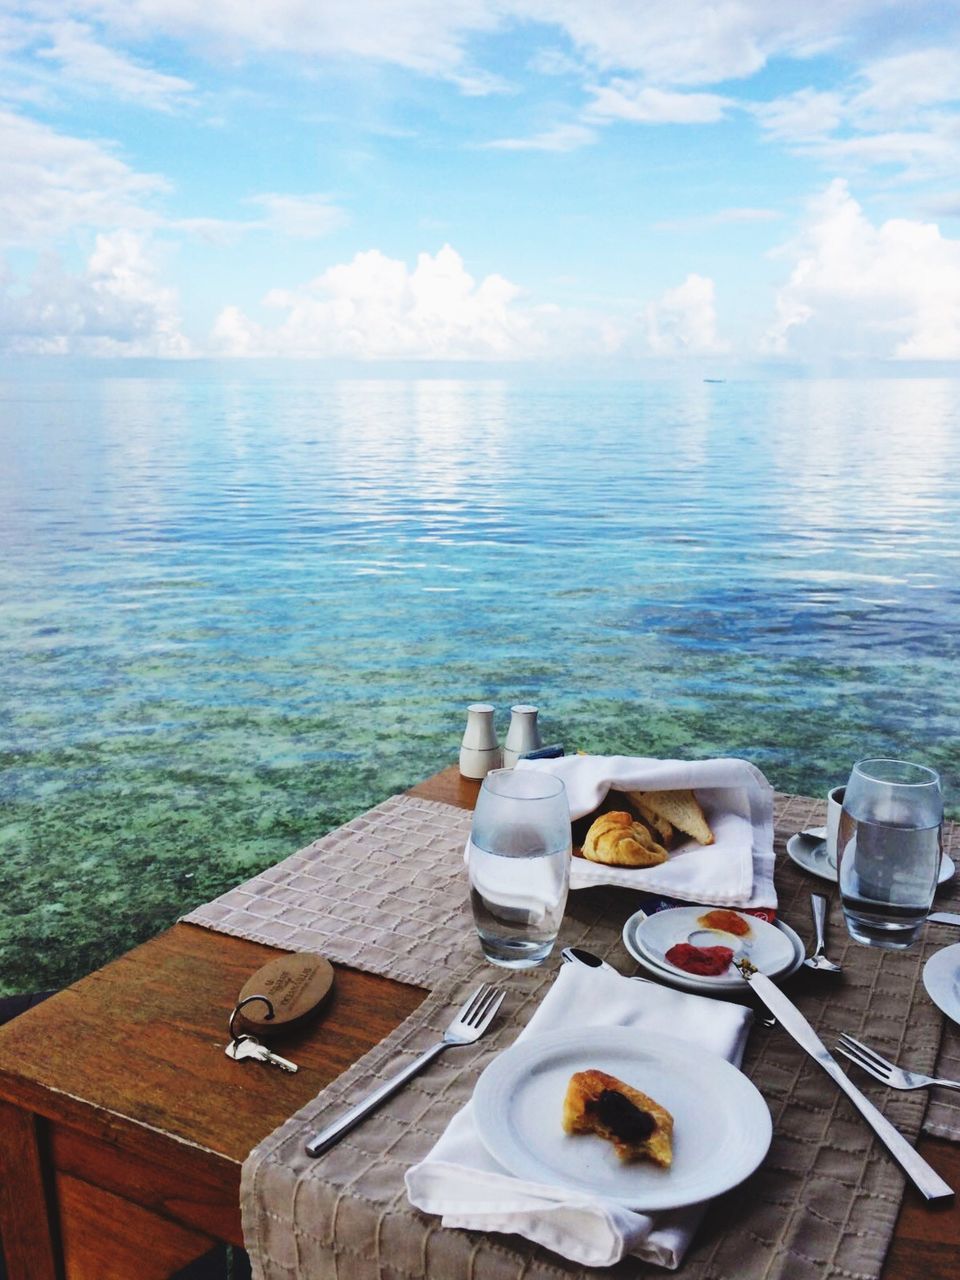 Breakfast on table by sea against sky